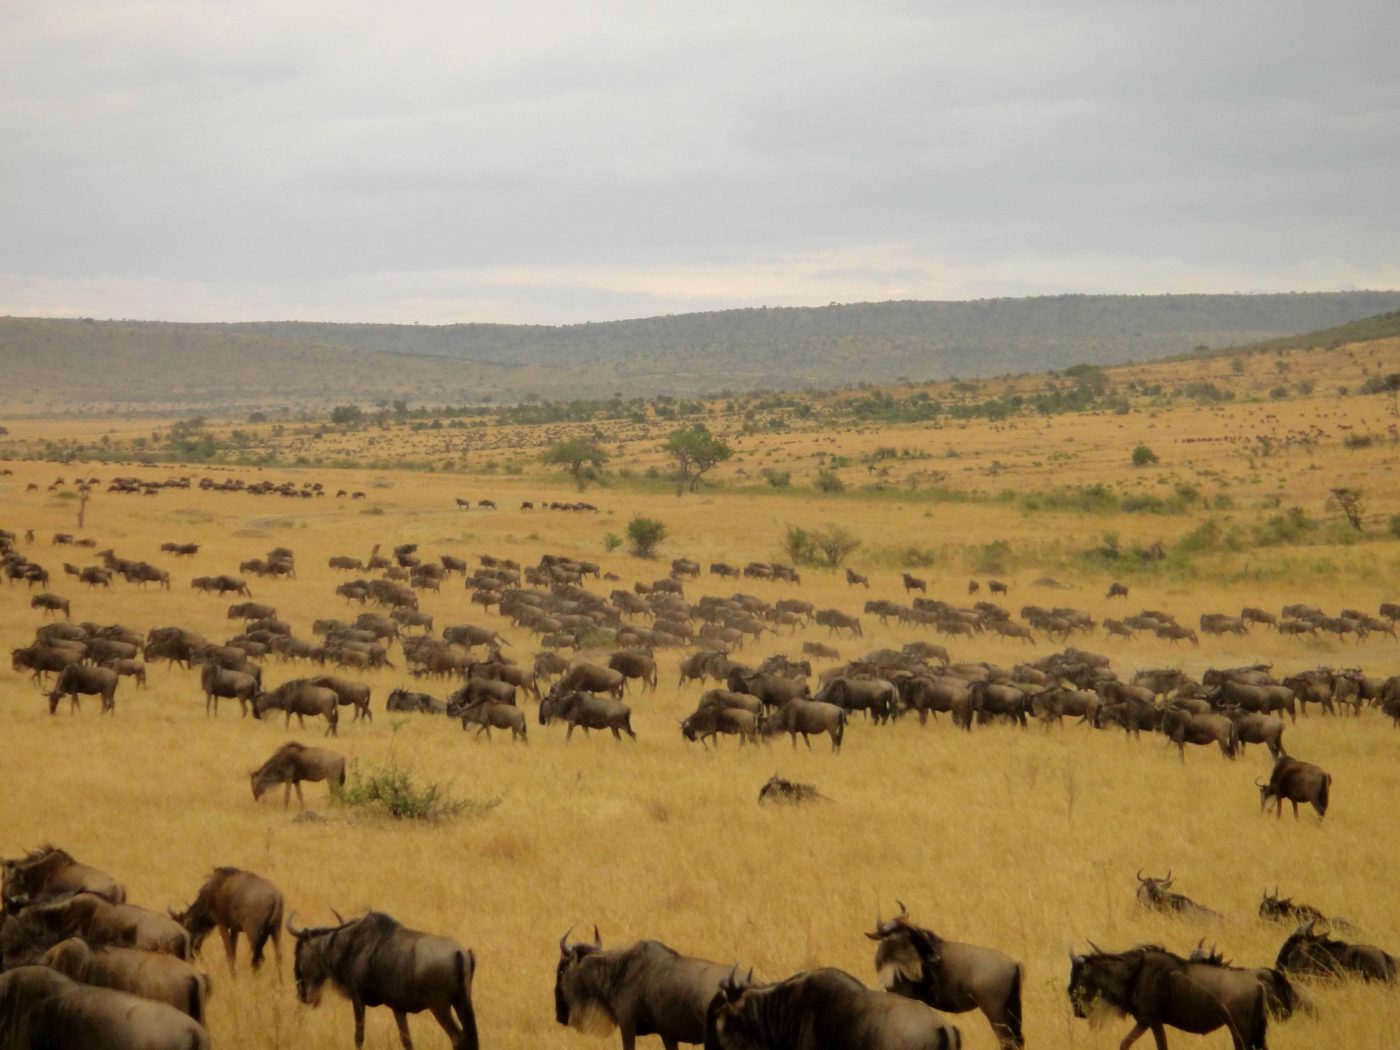 wildebeest migration on a budget